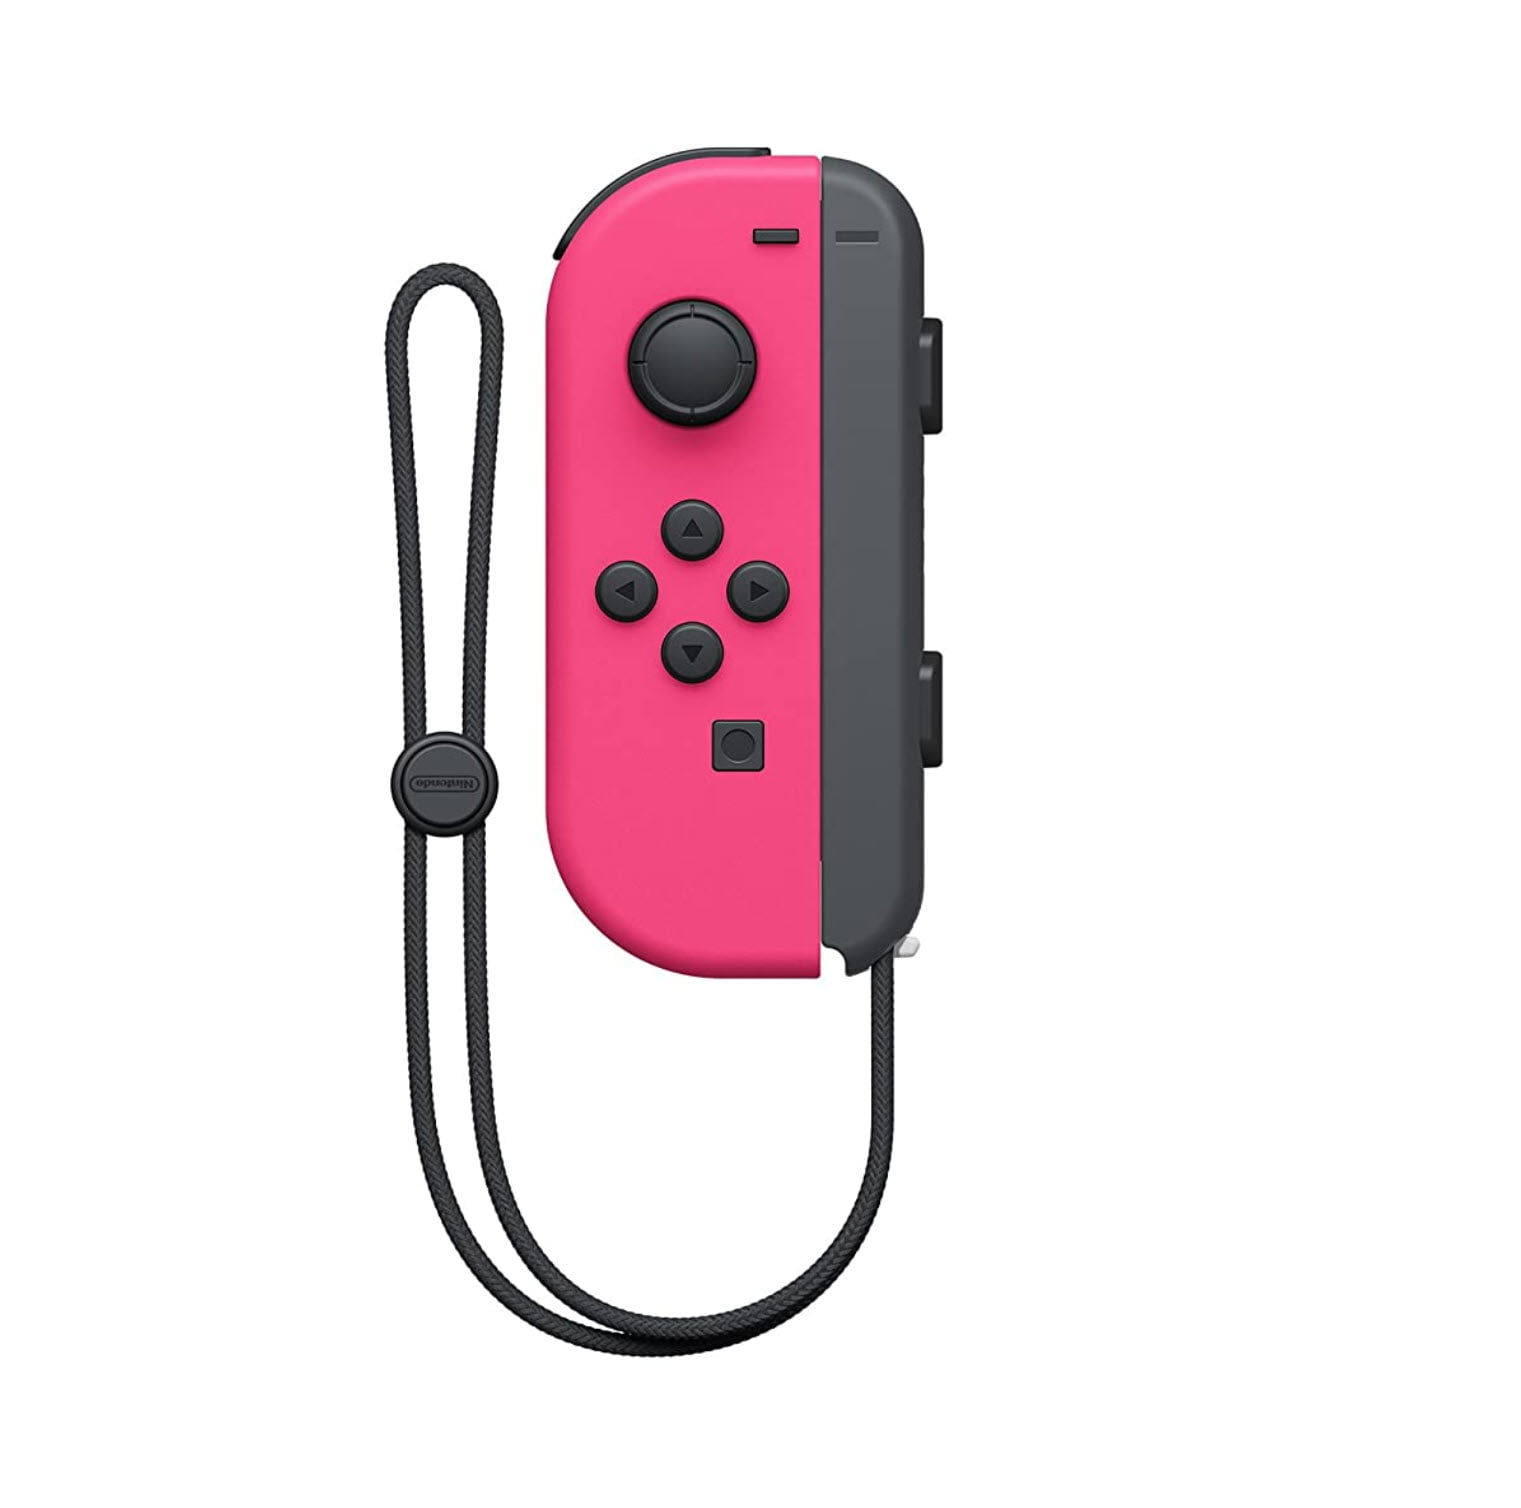 pink nintendo switch controller